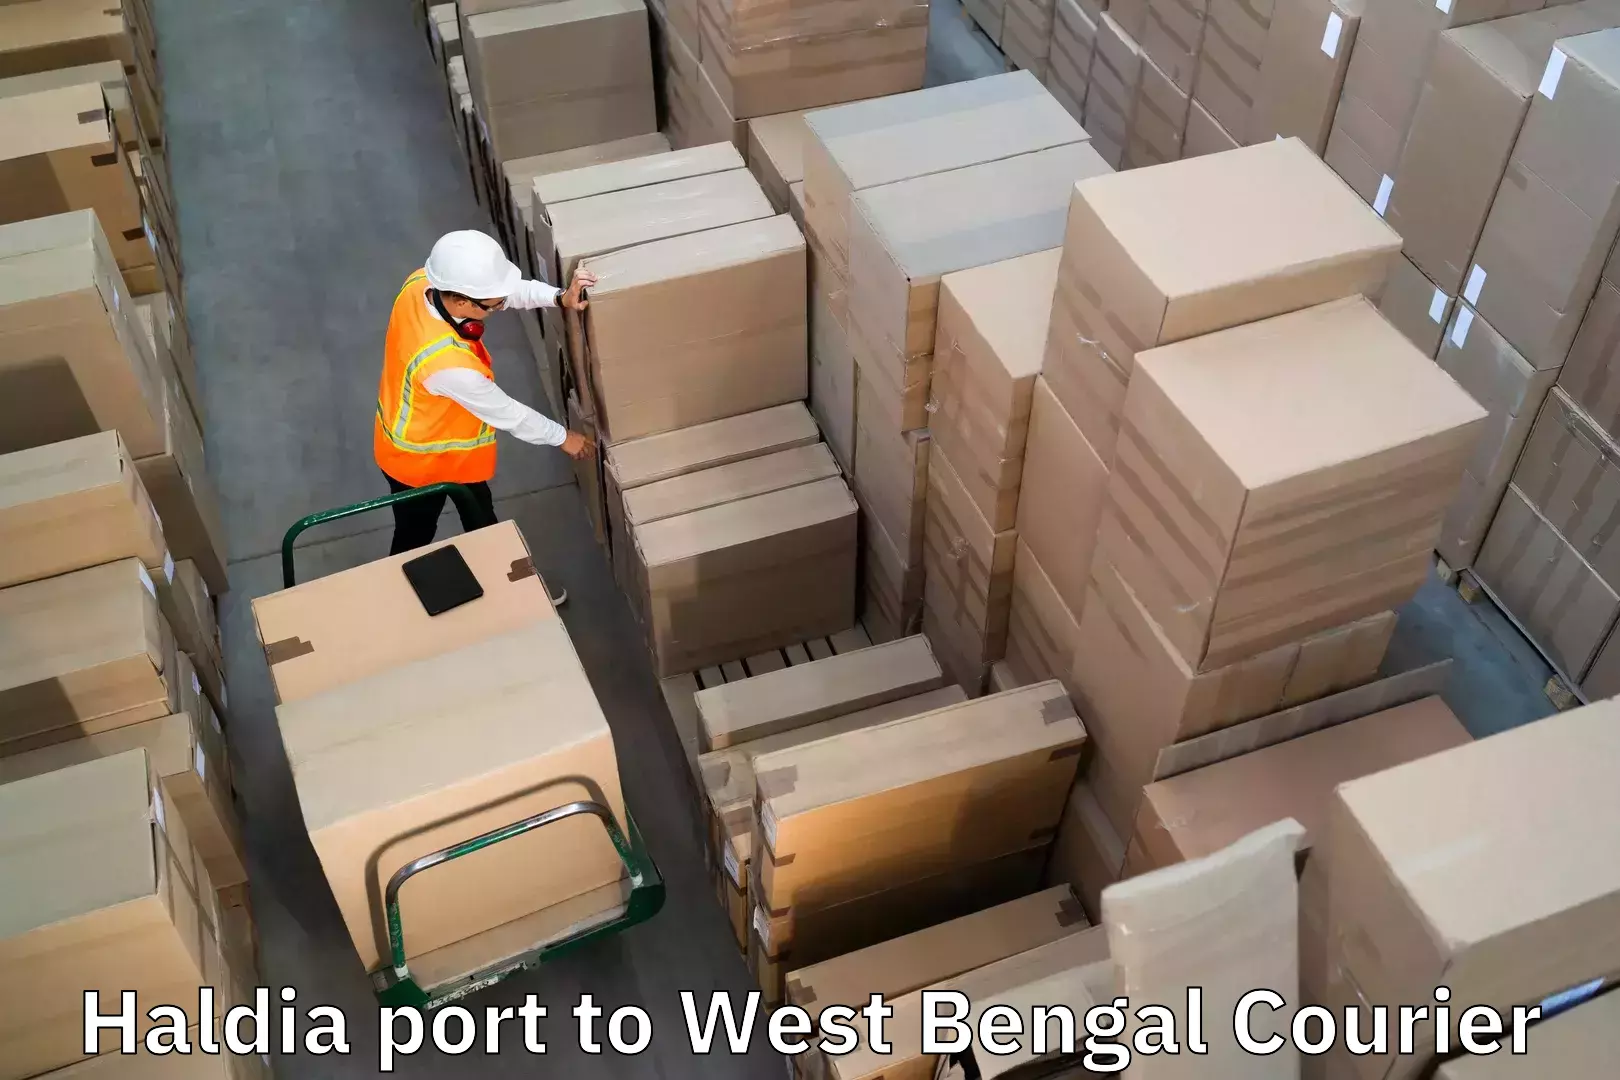 Baggage relocation service Haldia port to Khatra